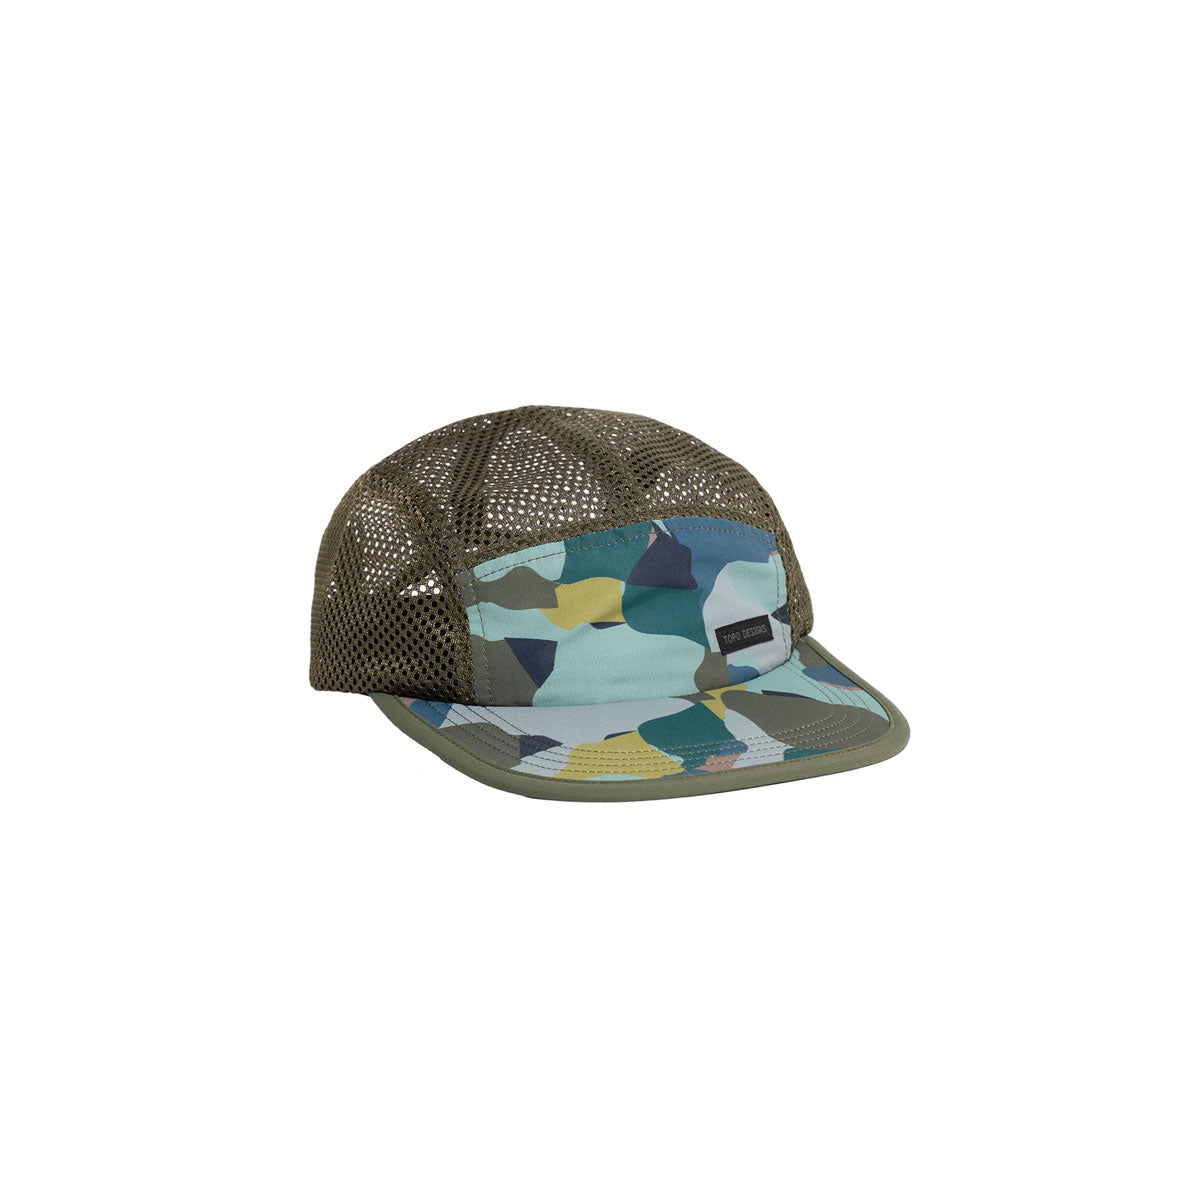 Topo Designs : Global Hat : Green Camo